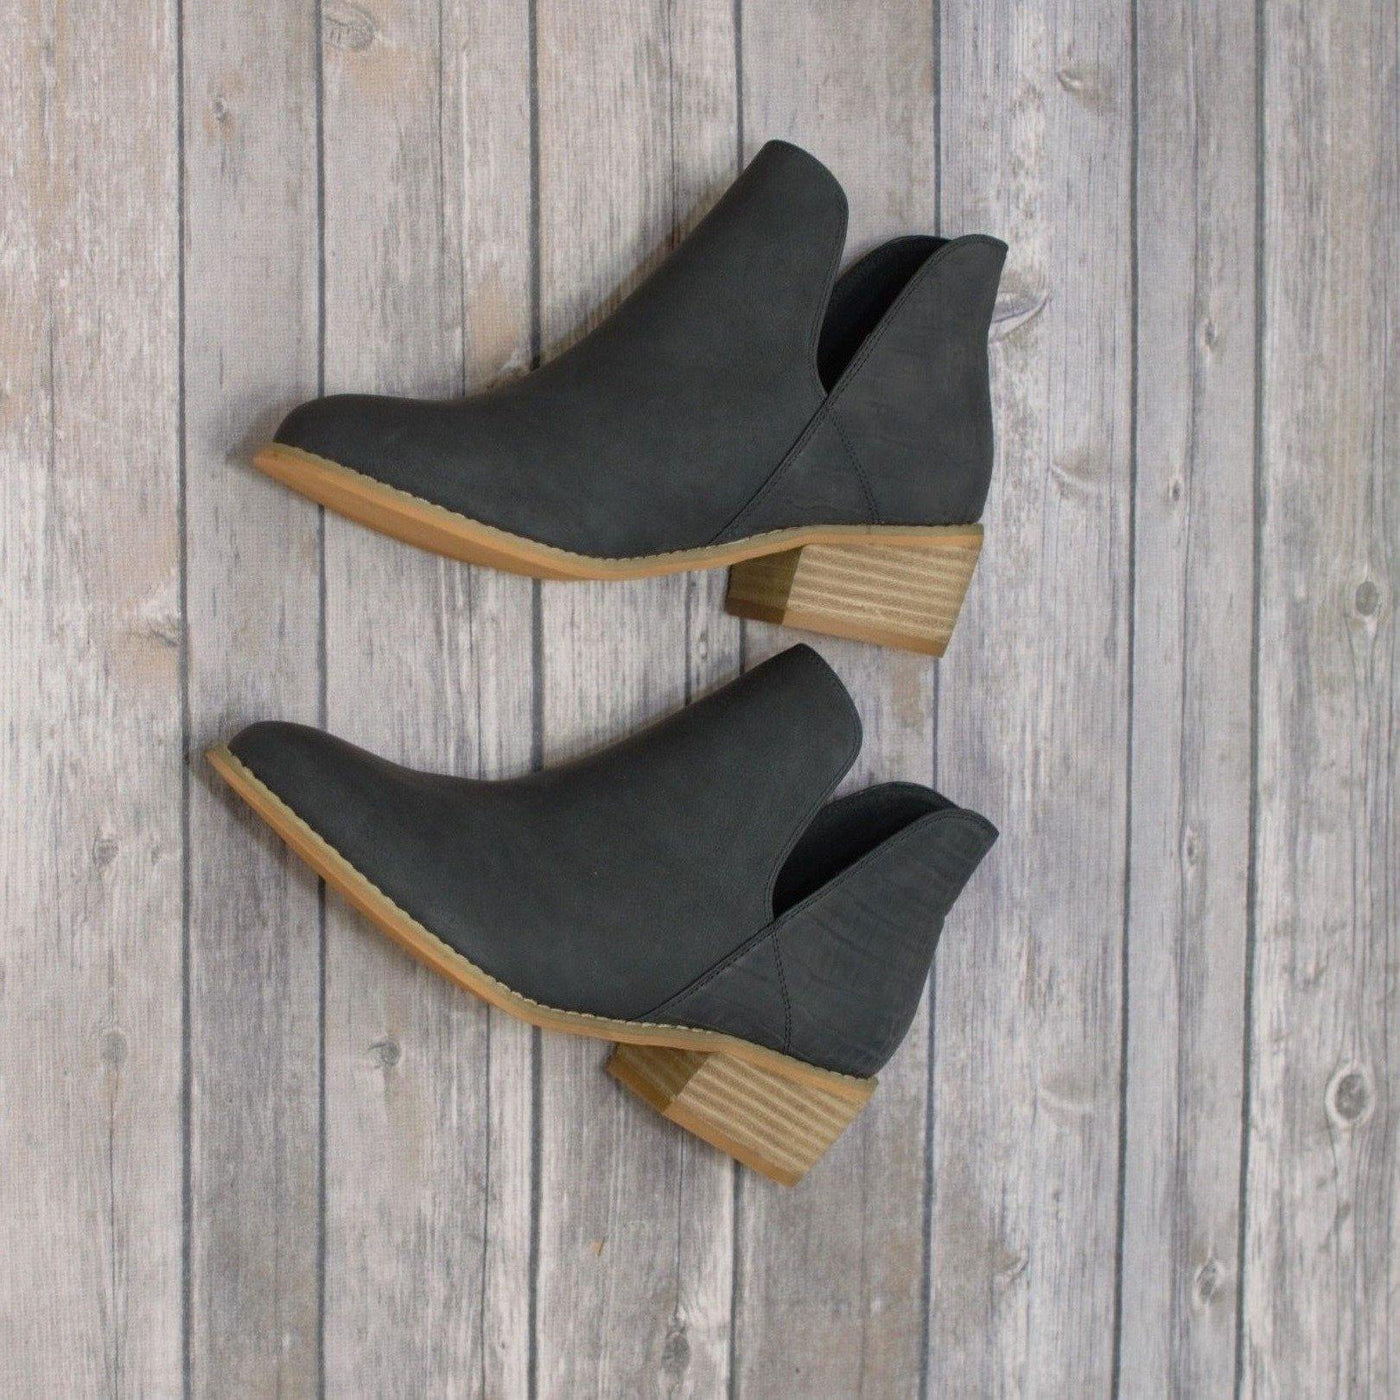 Corkys Black Crocodile Leather Wayland Ankle Booties - Shoes - dalia + jade 